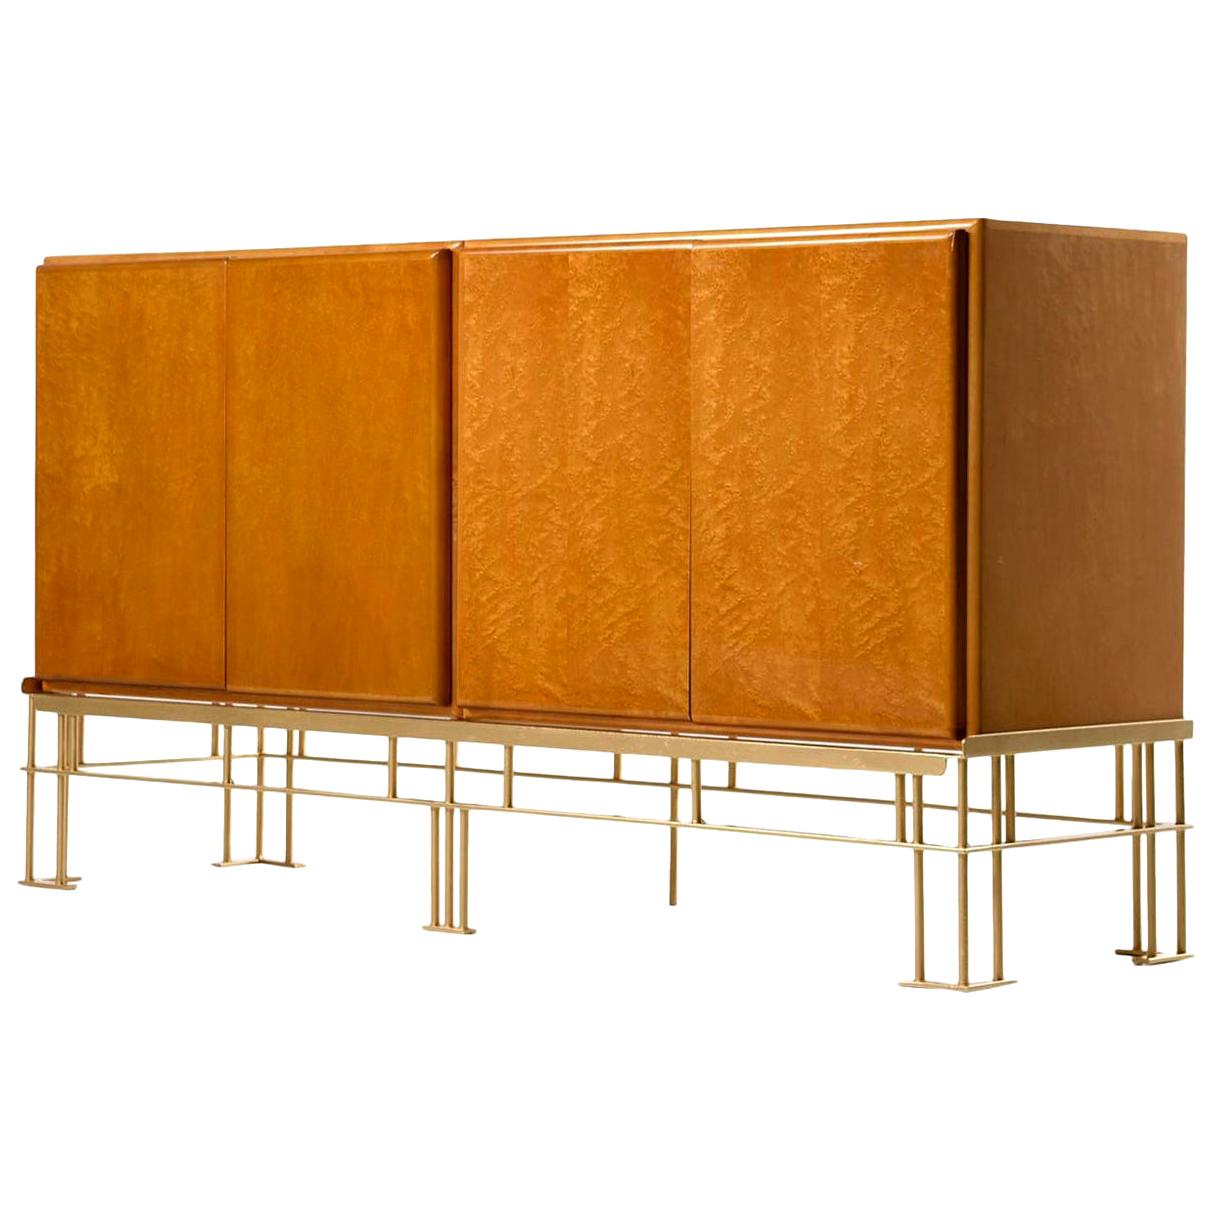 Hollywood Regency Maple Cabinets on Custom Made Metal Base